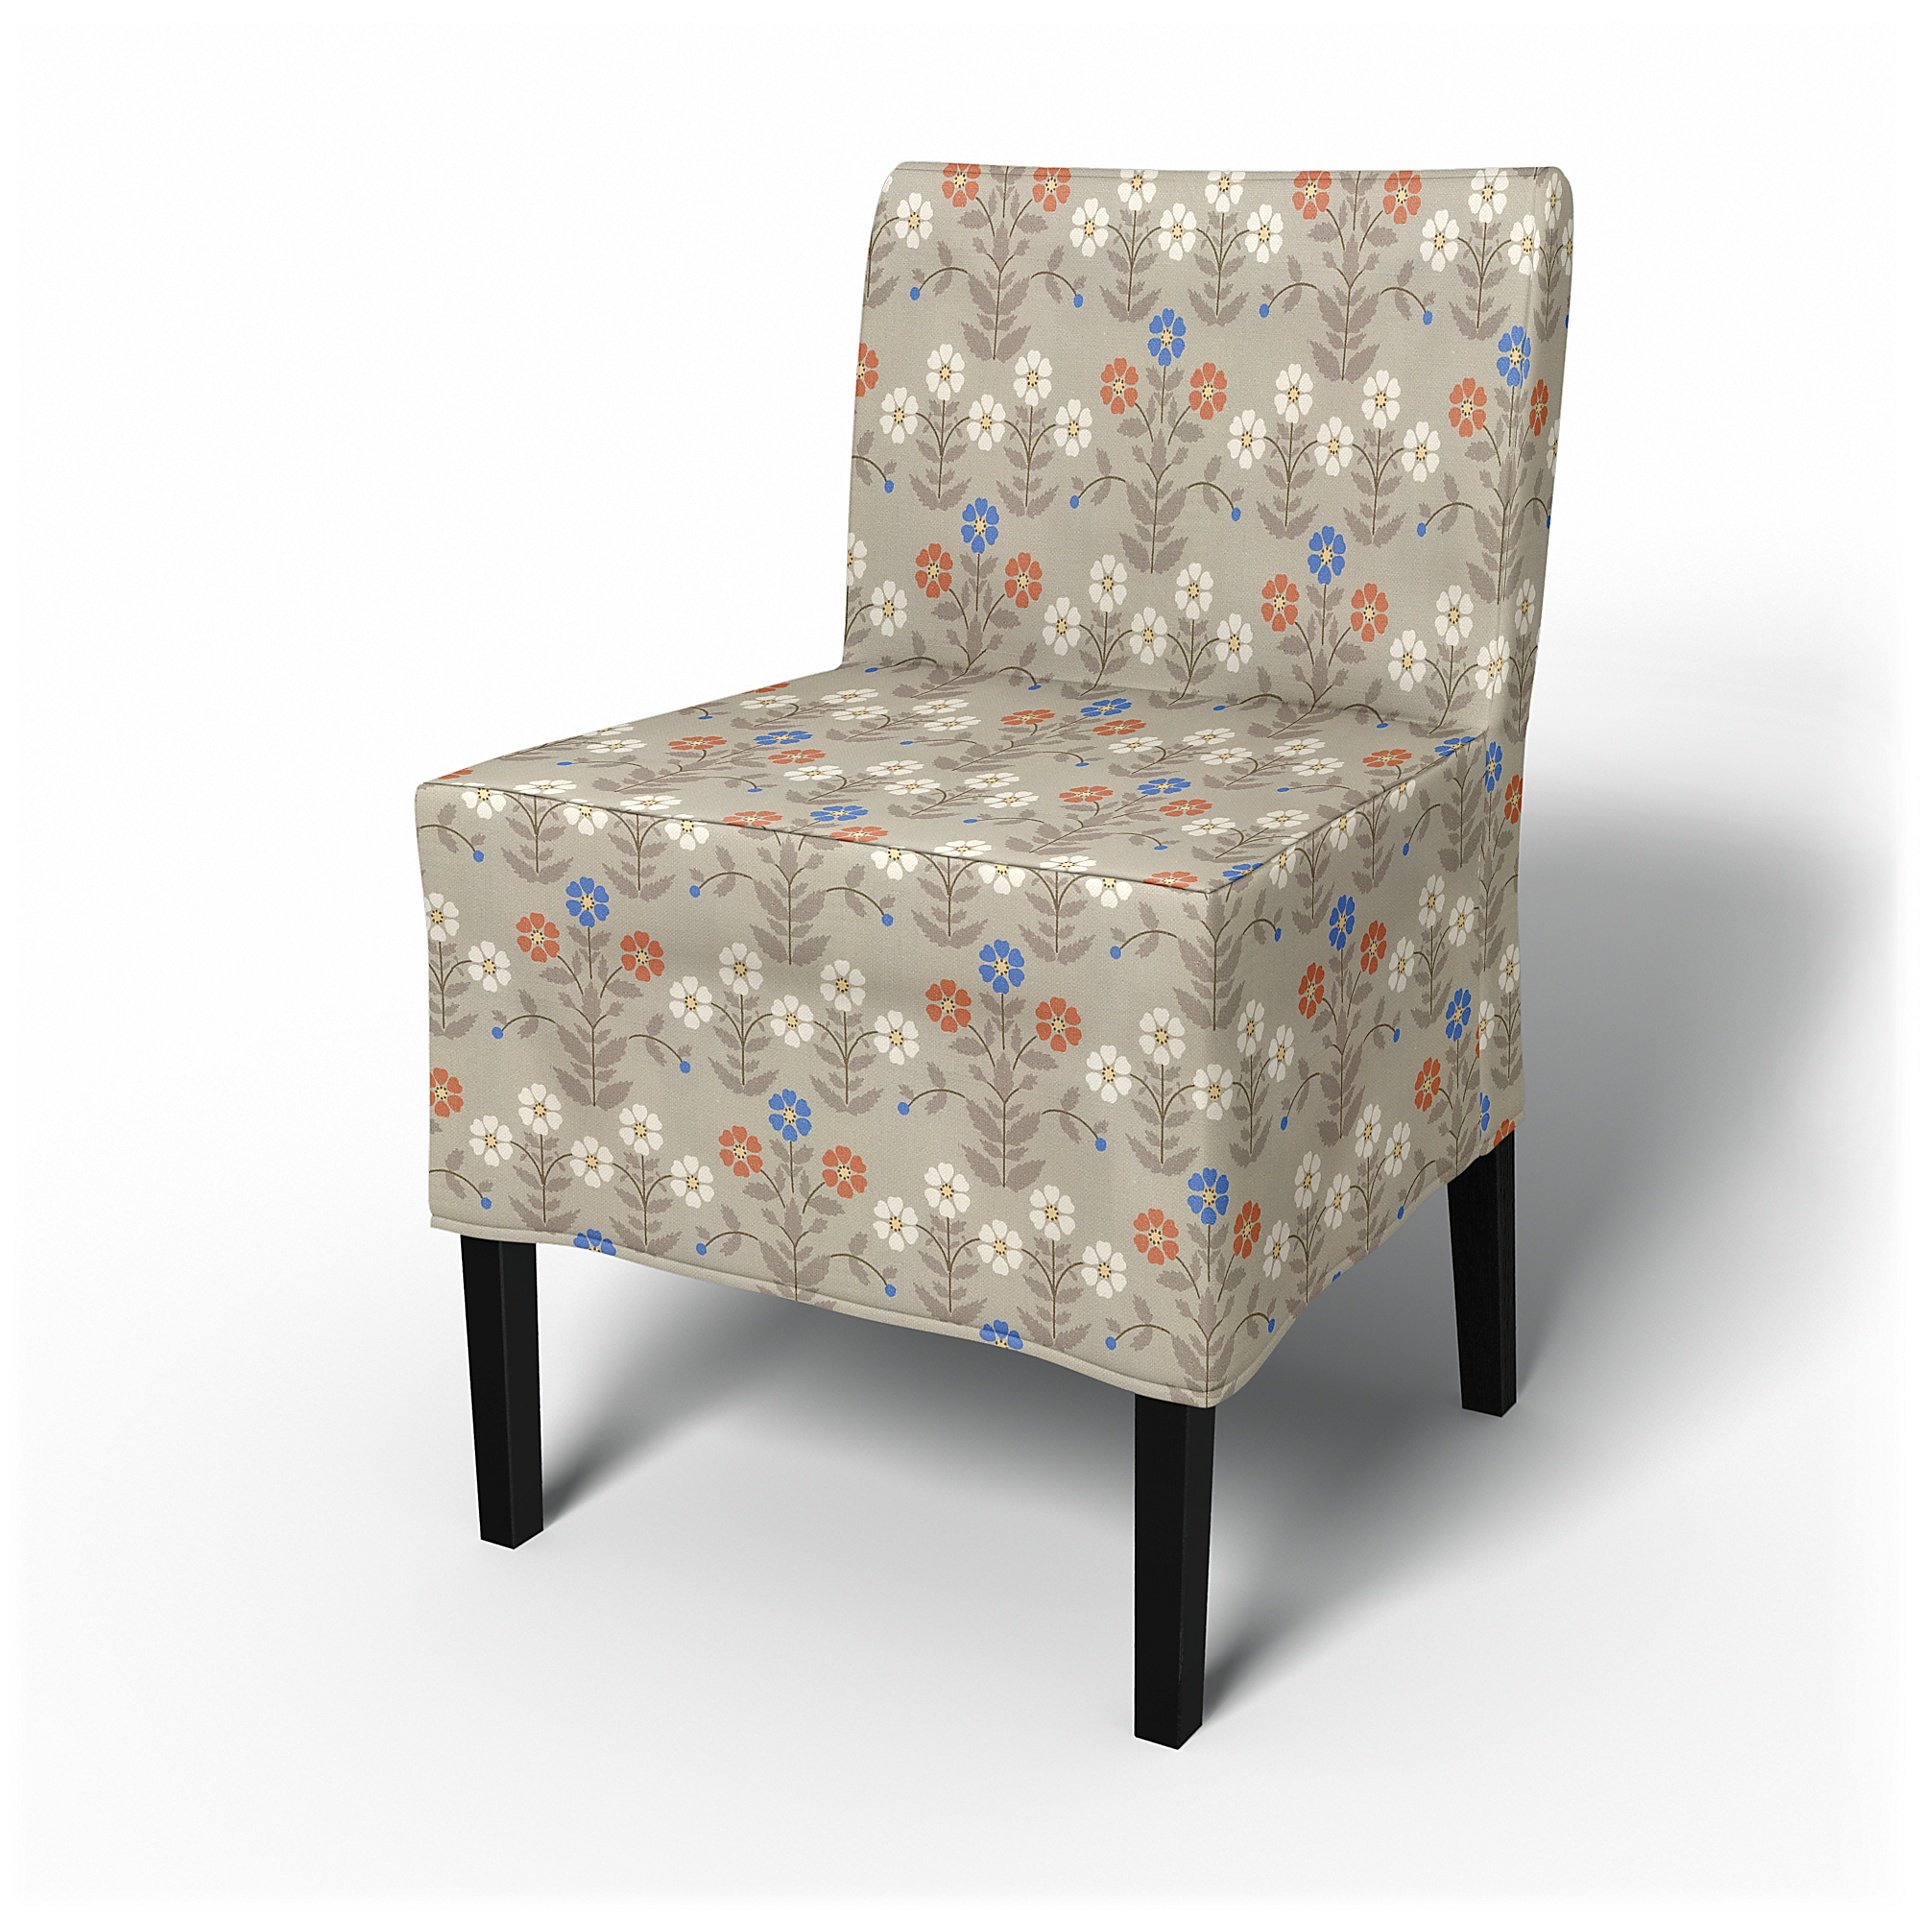 IKEA - Nils Dining Chair Cover, Sippor Blue/Orange, BEMZ x BORASTAPETER COLLECTION - Bemz